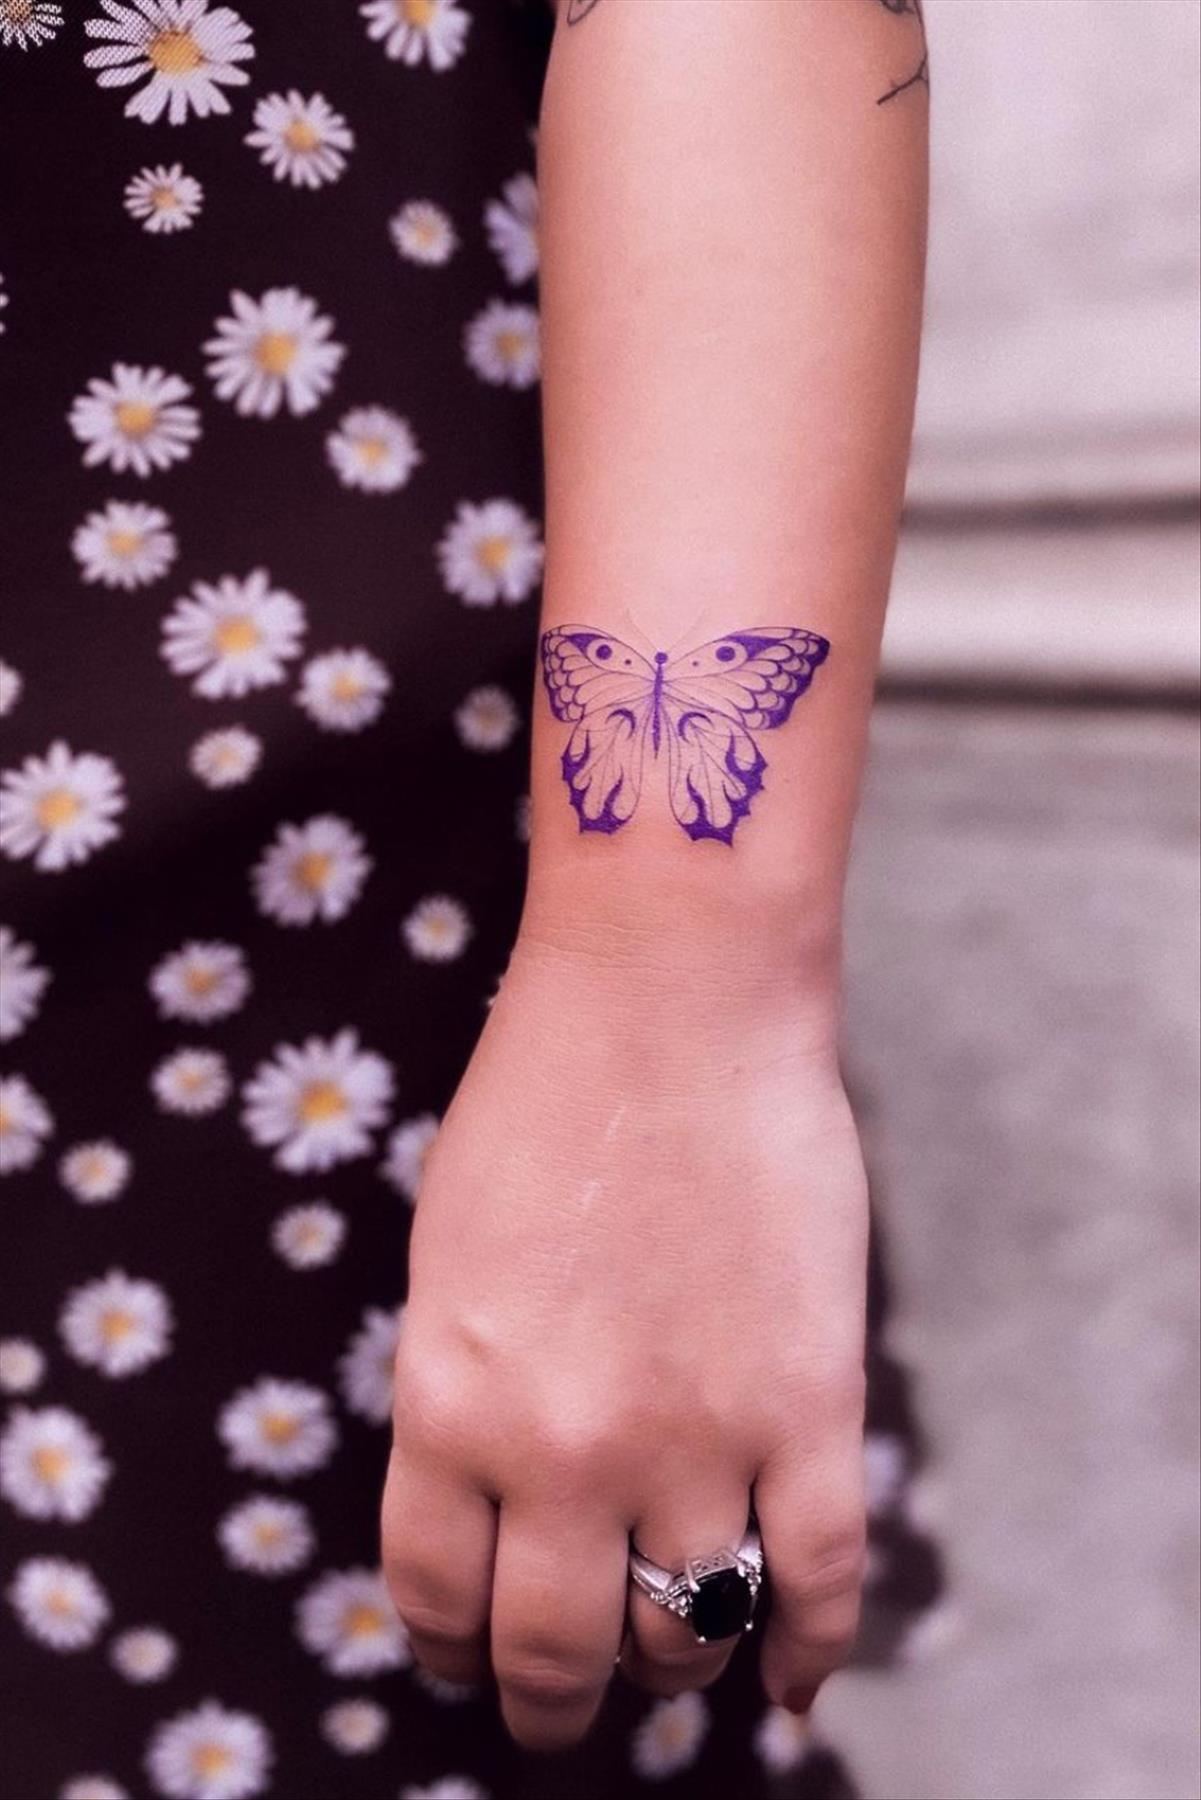 Bold butterfly tattoo ideas for women 2022